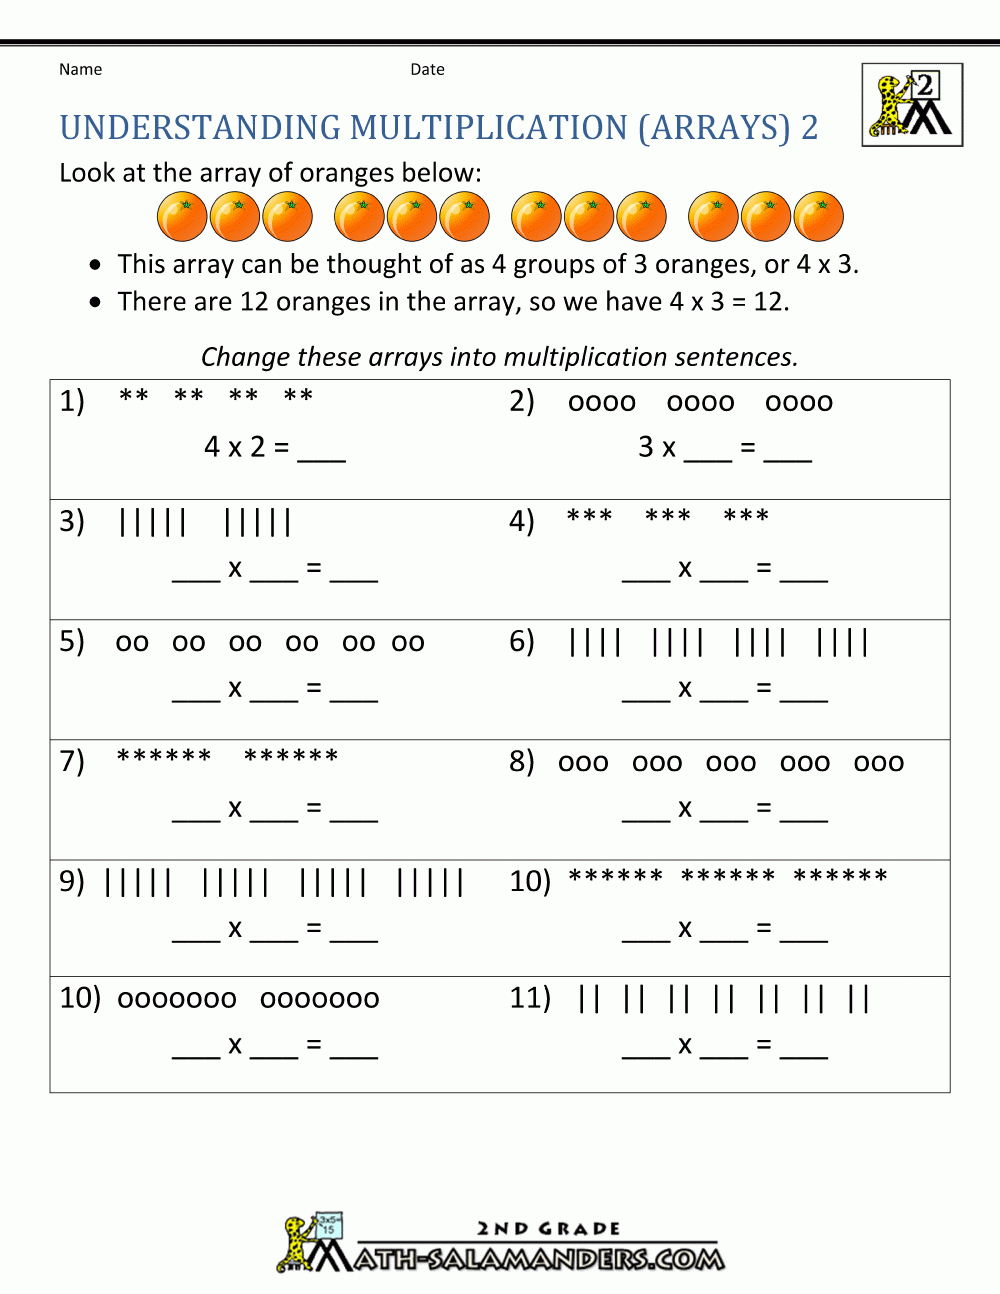 Beginning Multiplication Worksheets intended for Worksheets About Multiplication